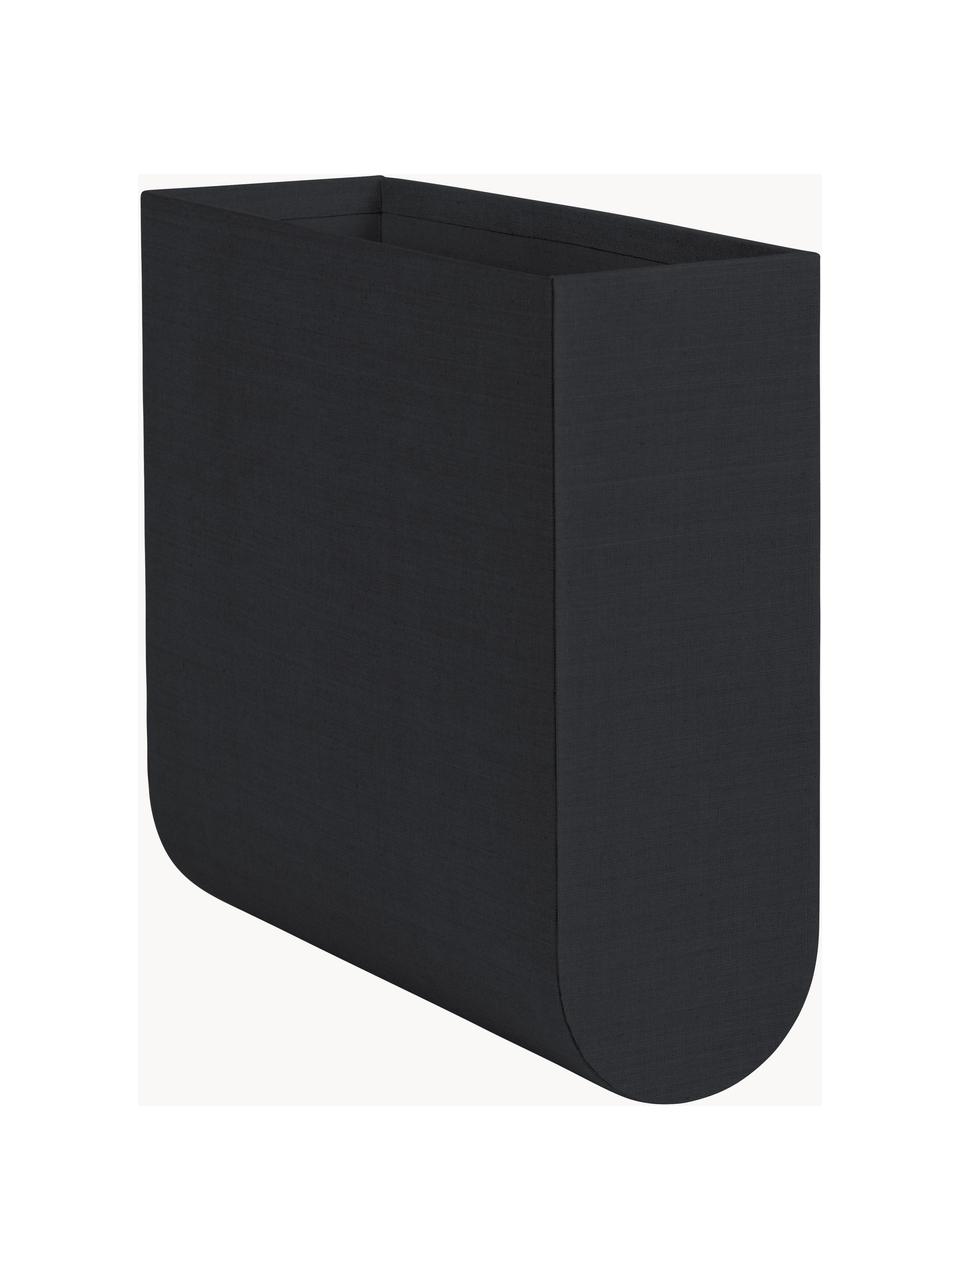 Caja artesanal Curved, An 12 cm, Funda: 100% algodón, Estructura: cartón, Negro, An 12 x Al 33 cm